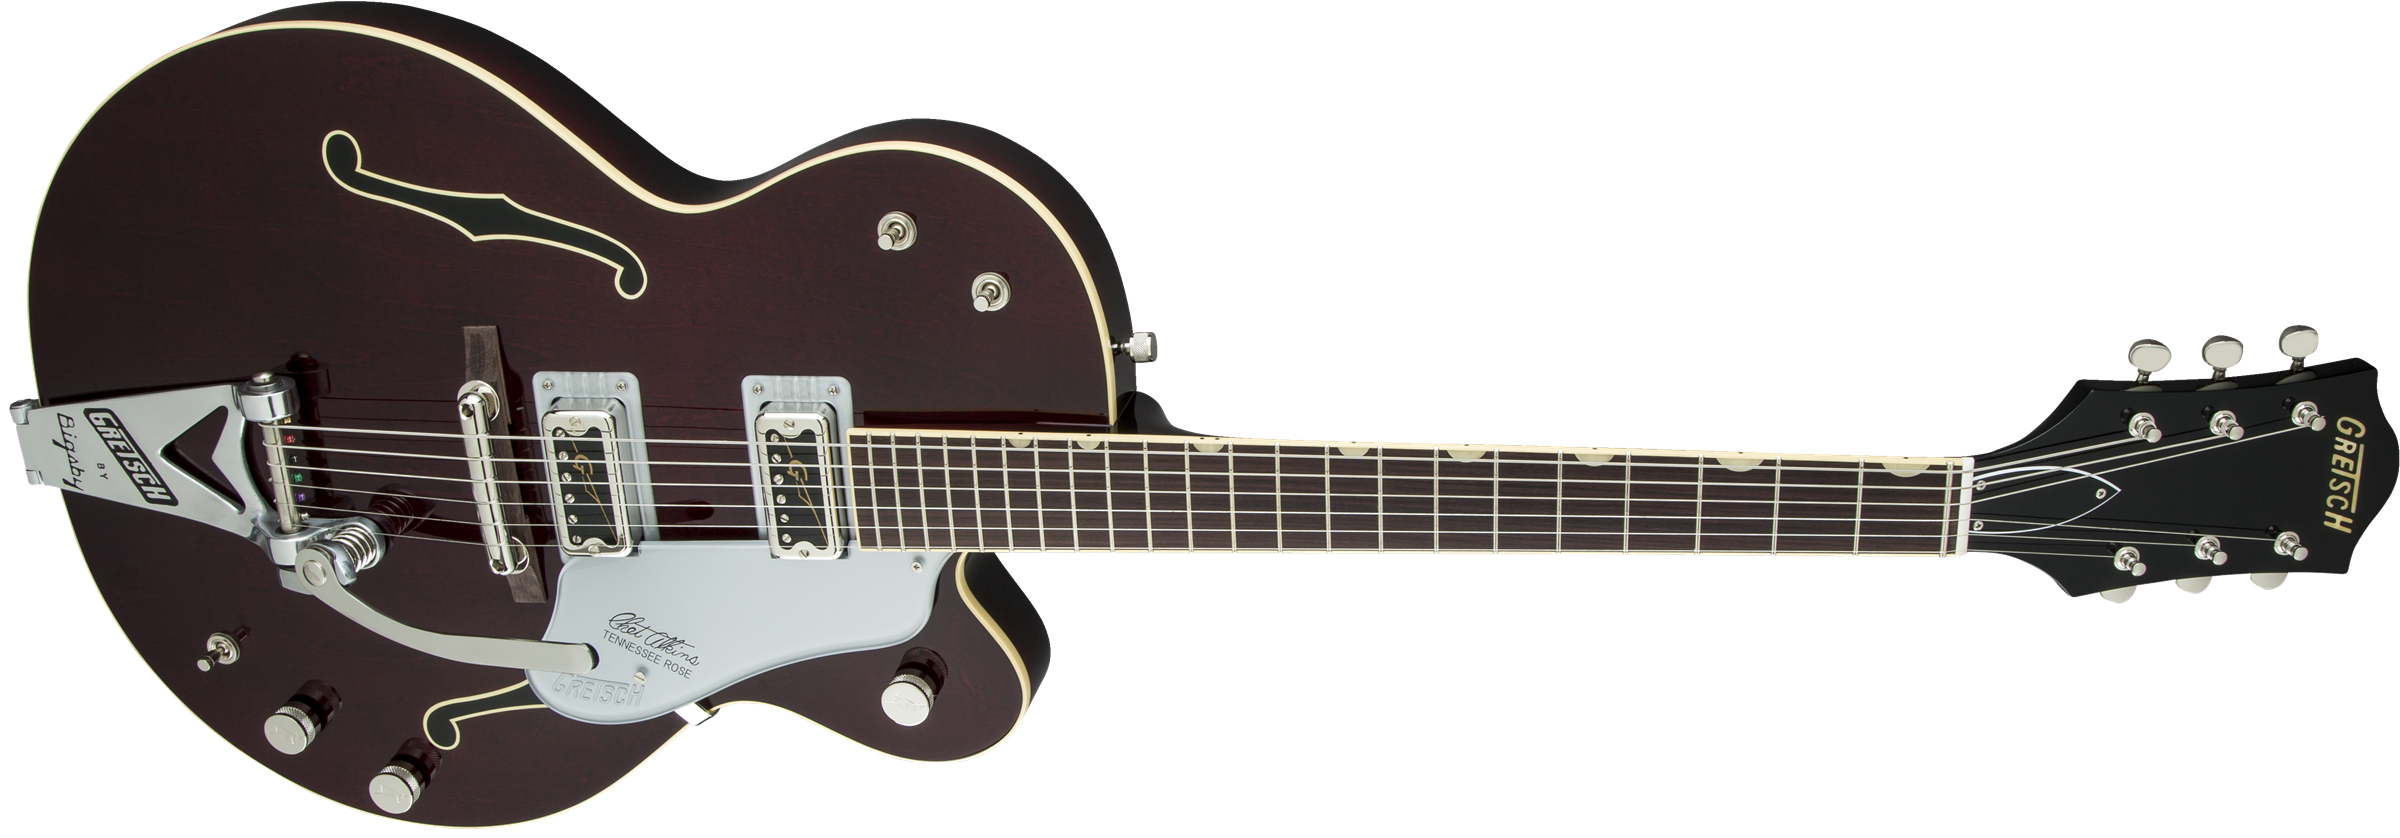 Gretsch G6119t-62vs Chet Atkins Tennessee Rose 2h Trem Rw - Dark Cherry Stain - Semi hollow elektriche gitaar - Variation 2